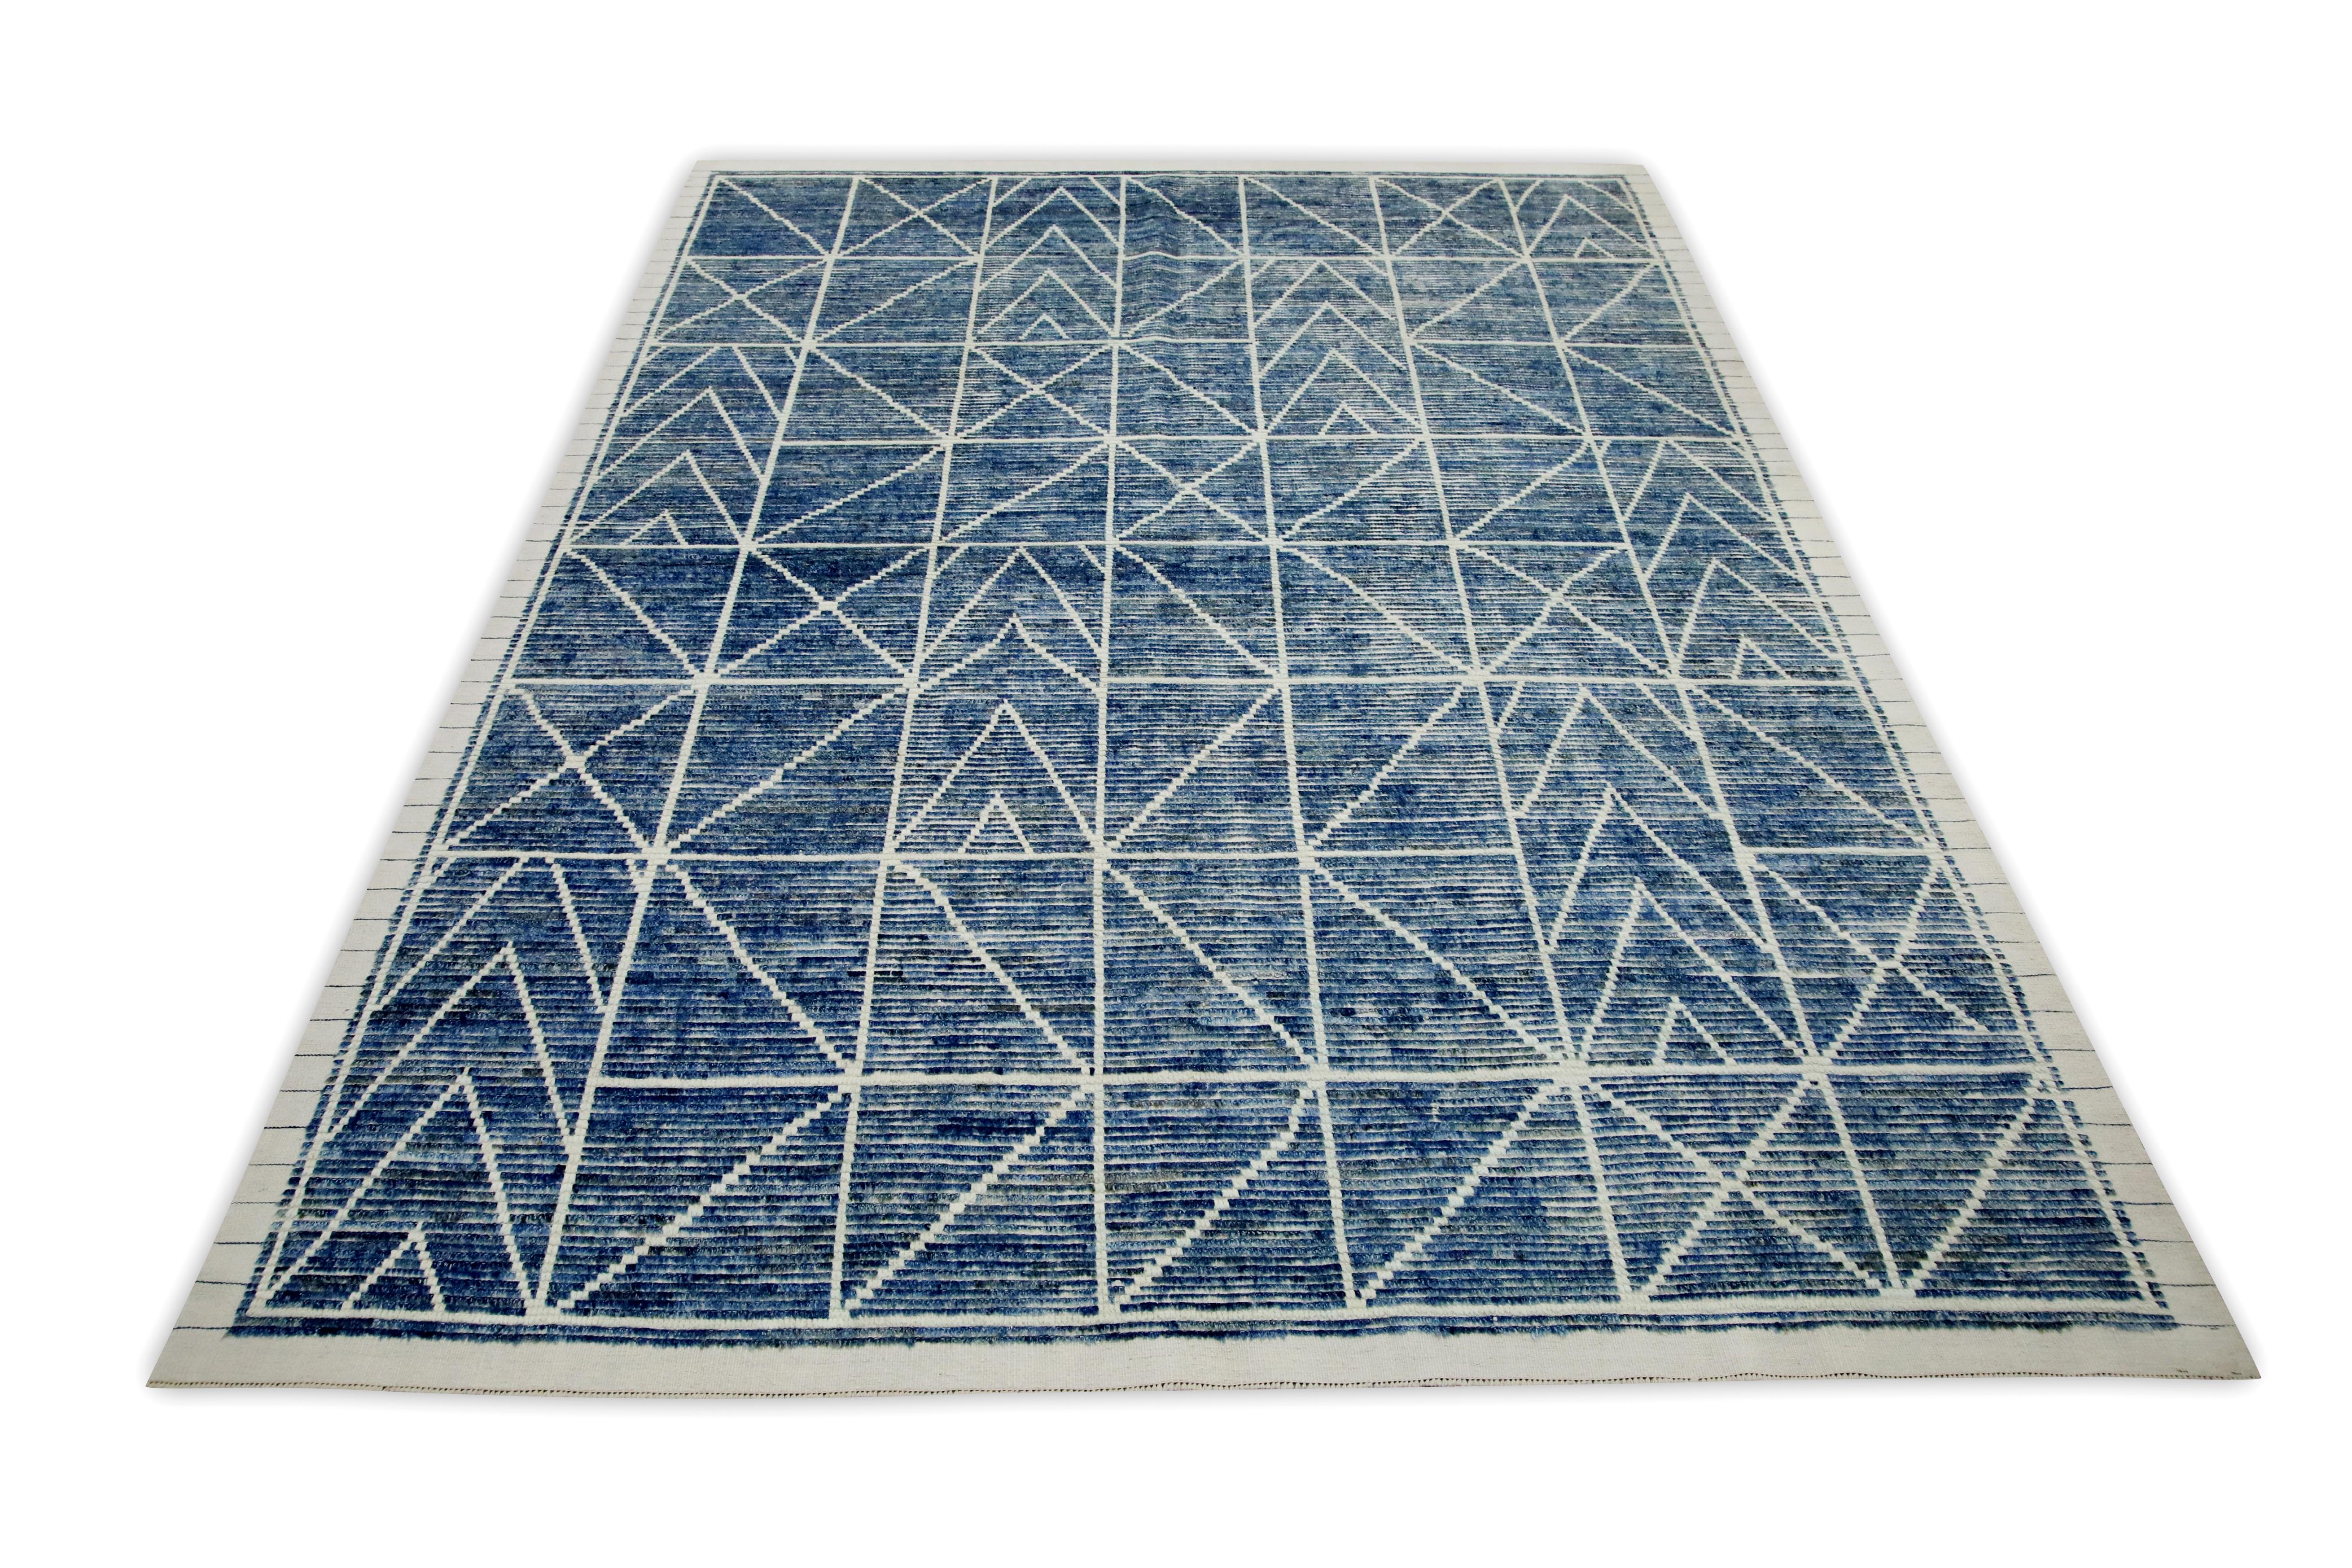 Blue Handmade Wool Tulu Rug in Geometric Design 8' x 10'4